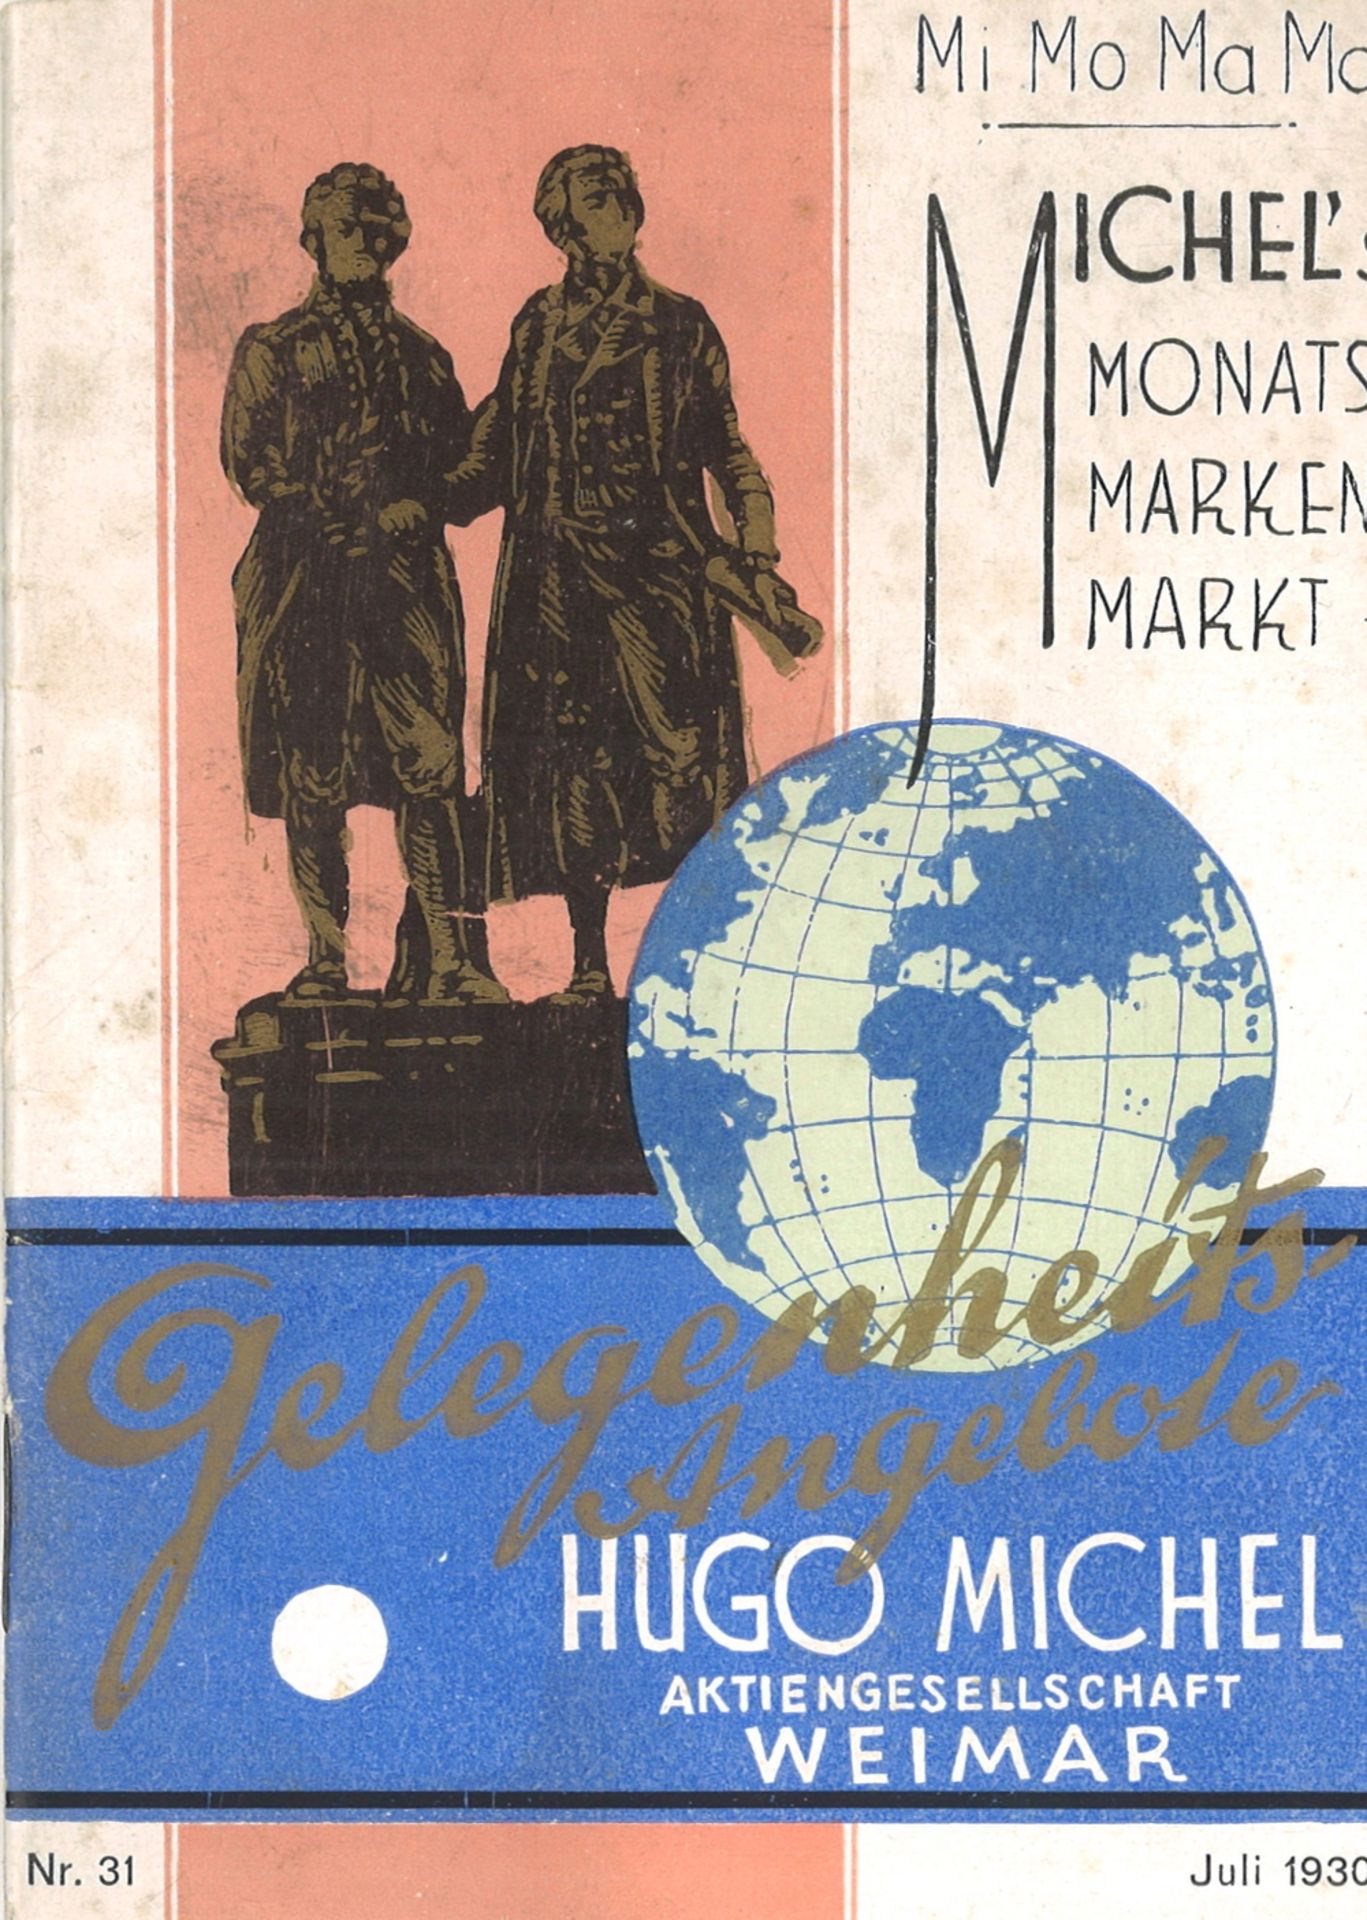 Michel Monats Marken Markt. Aktiengesellschaft Weimar, Nr. 31 Juli 1930